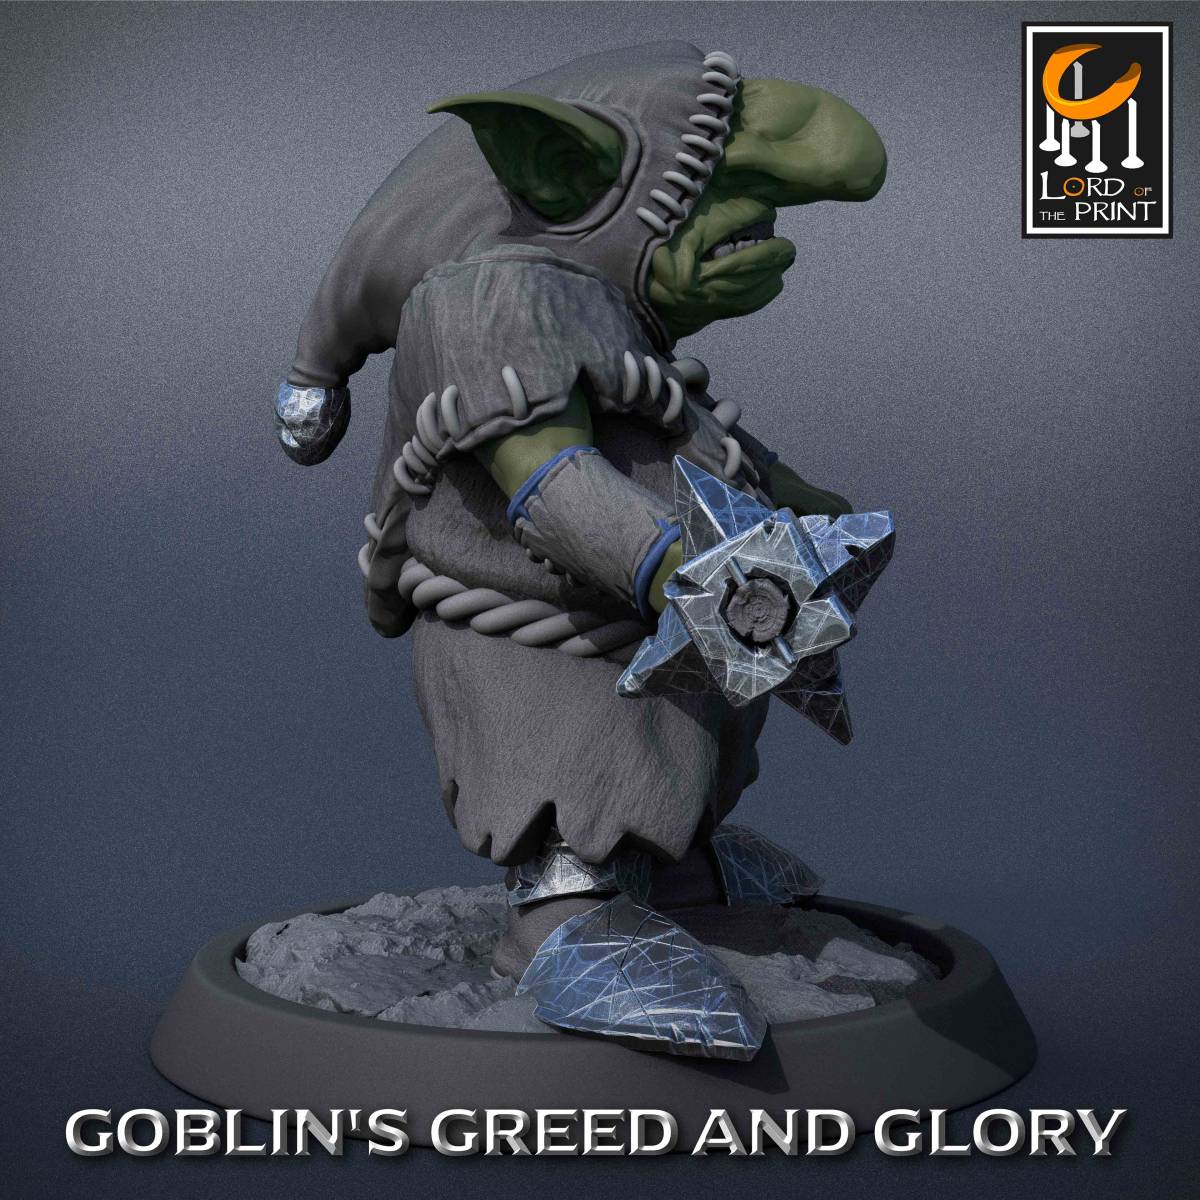 Lord of the Print Goblin Monk A Guardgo Brin 3D print miniature D&D TRPG